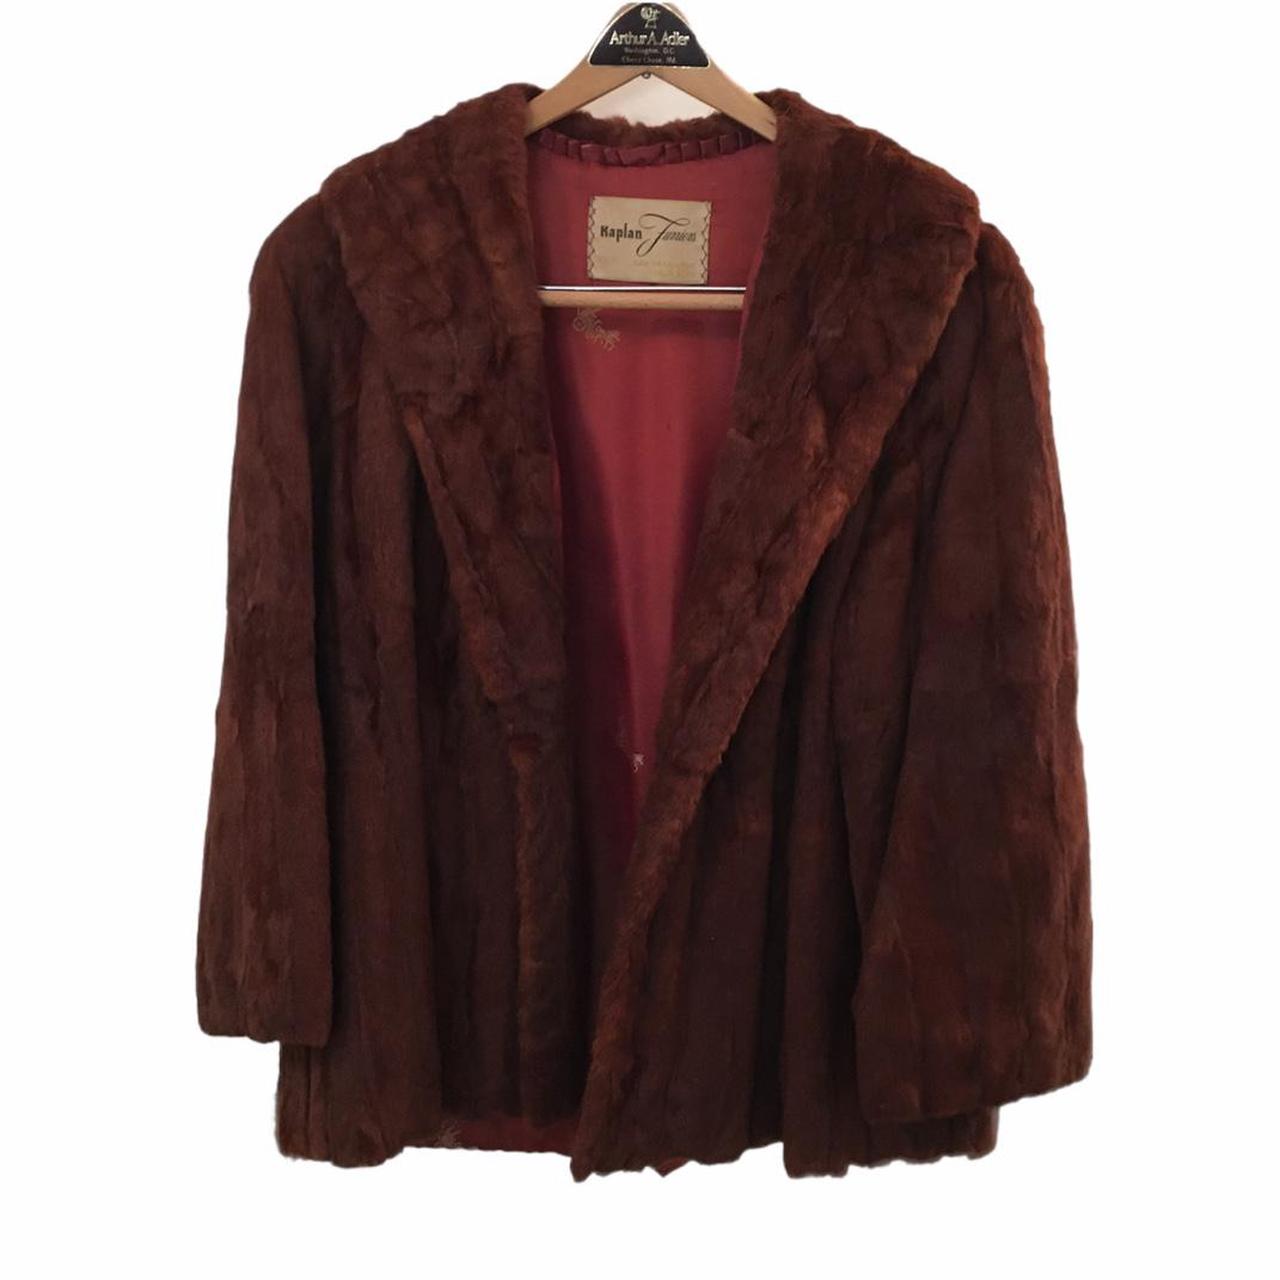 Product Image 1 - Authentic vintage brown fur coat